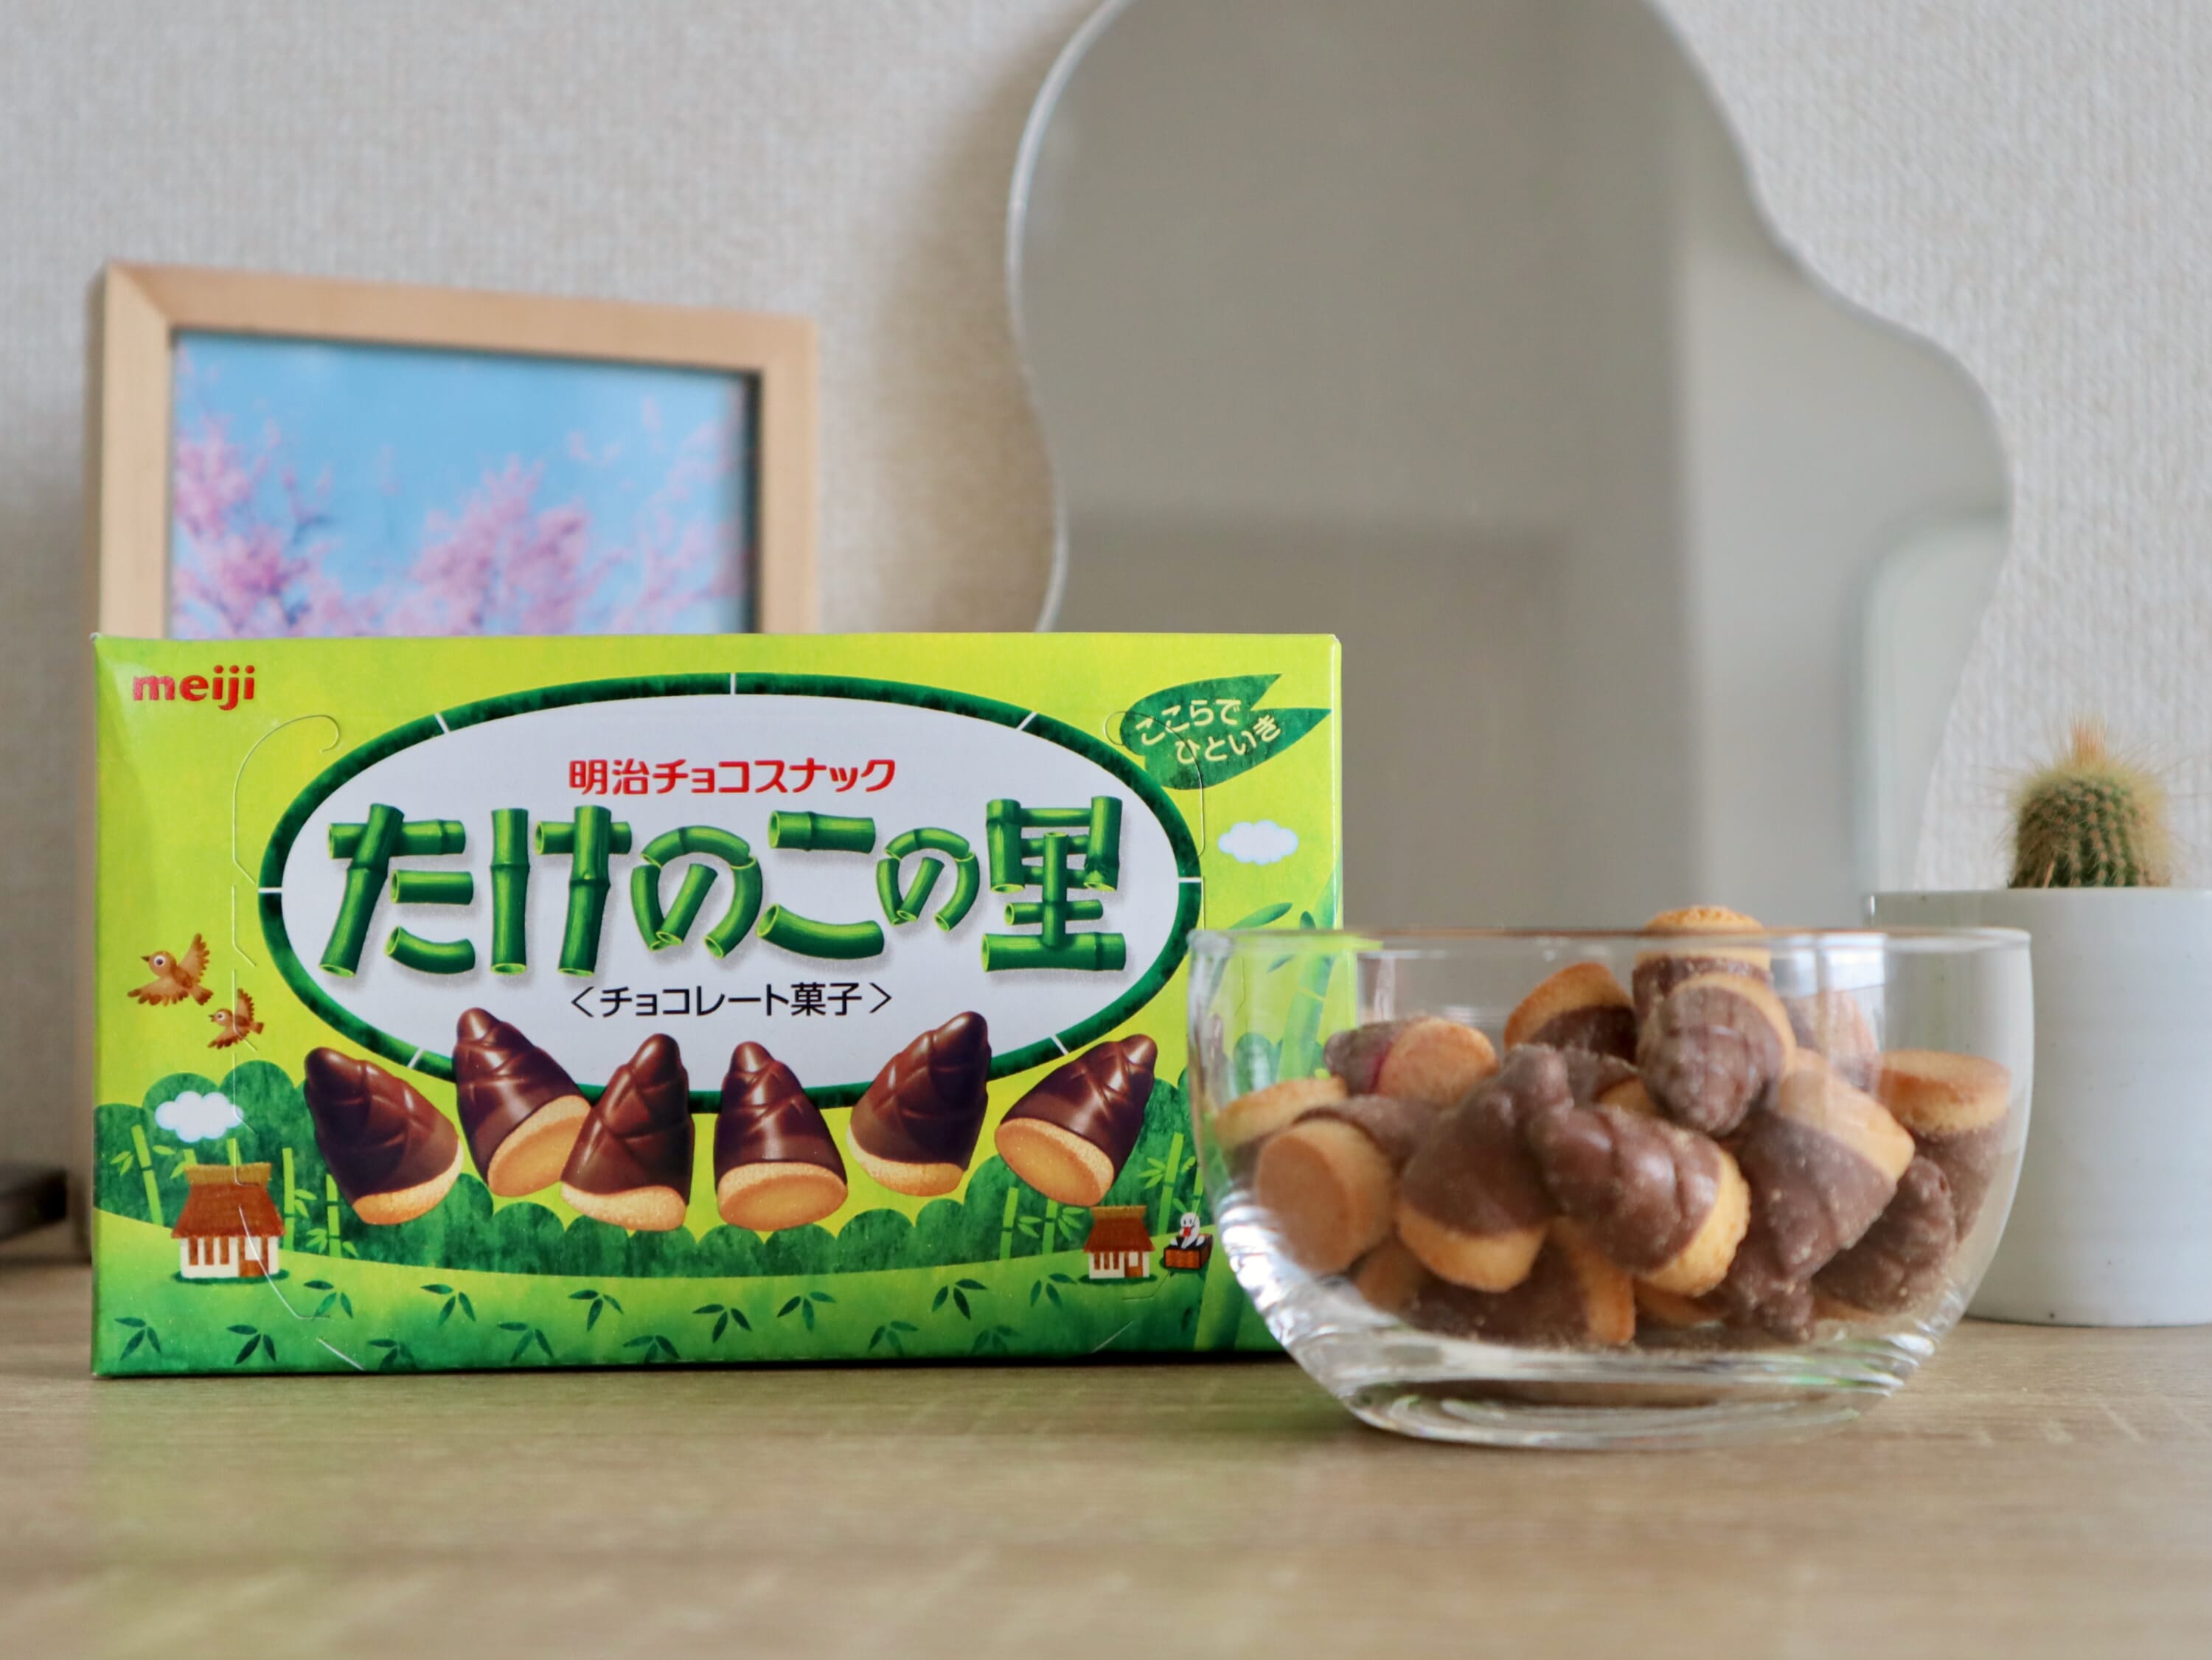 best japanese convenience store chocolates